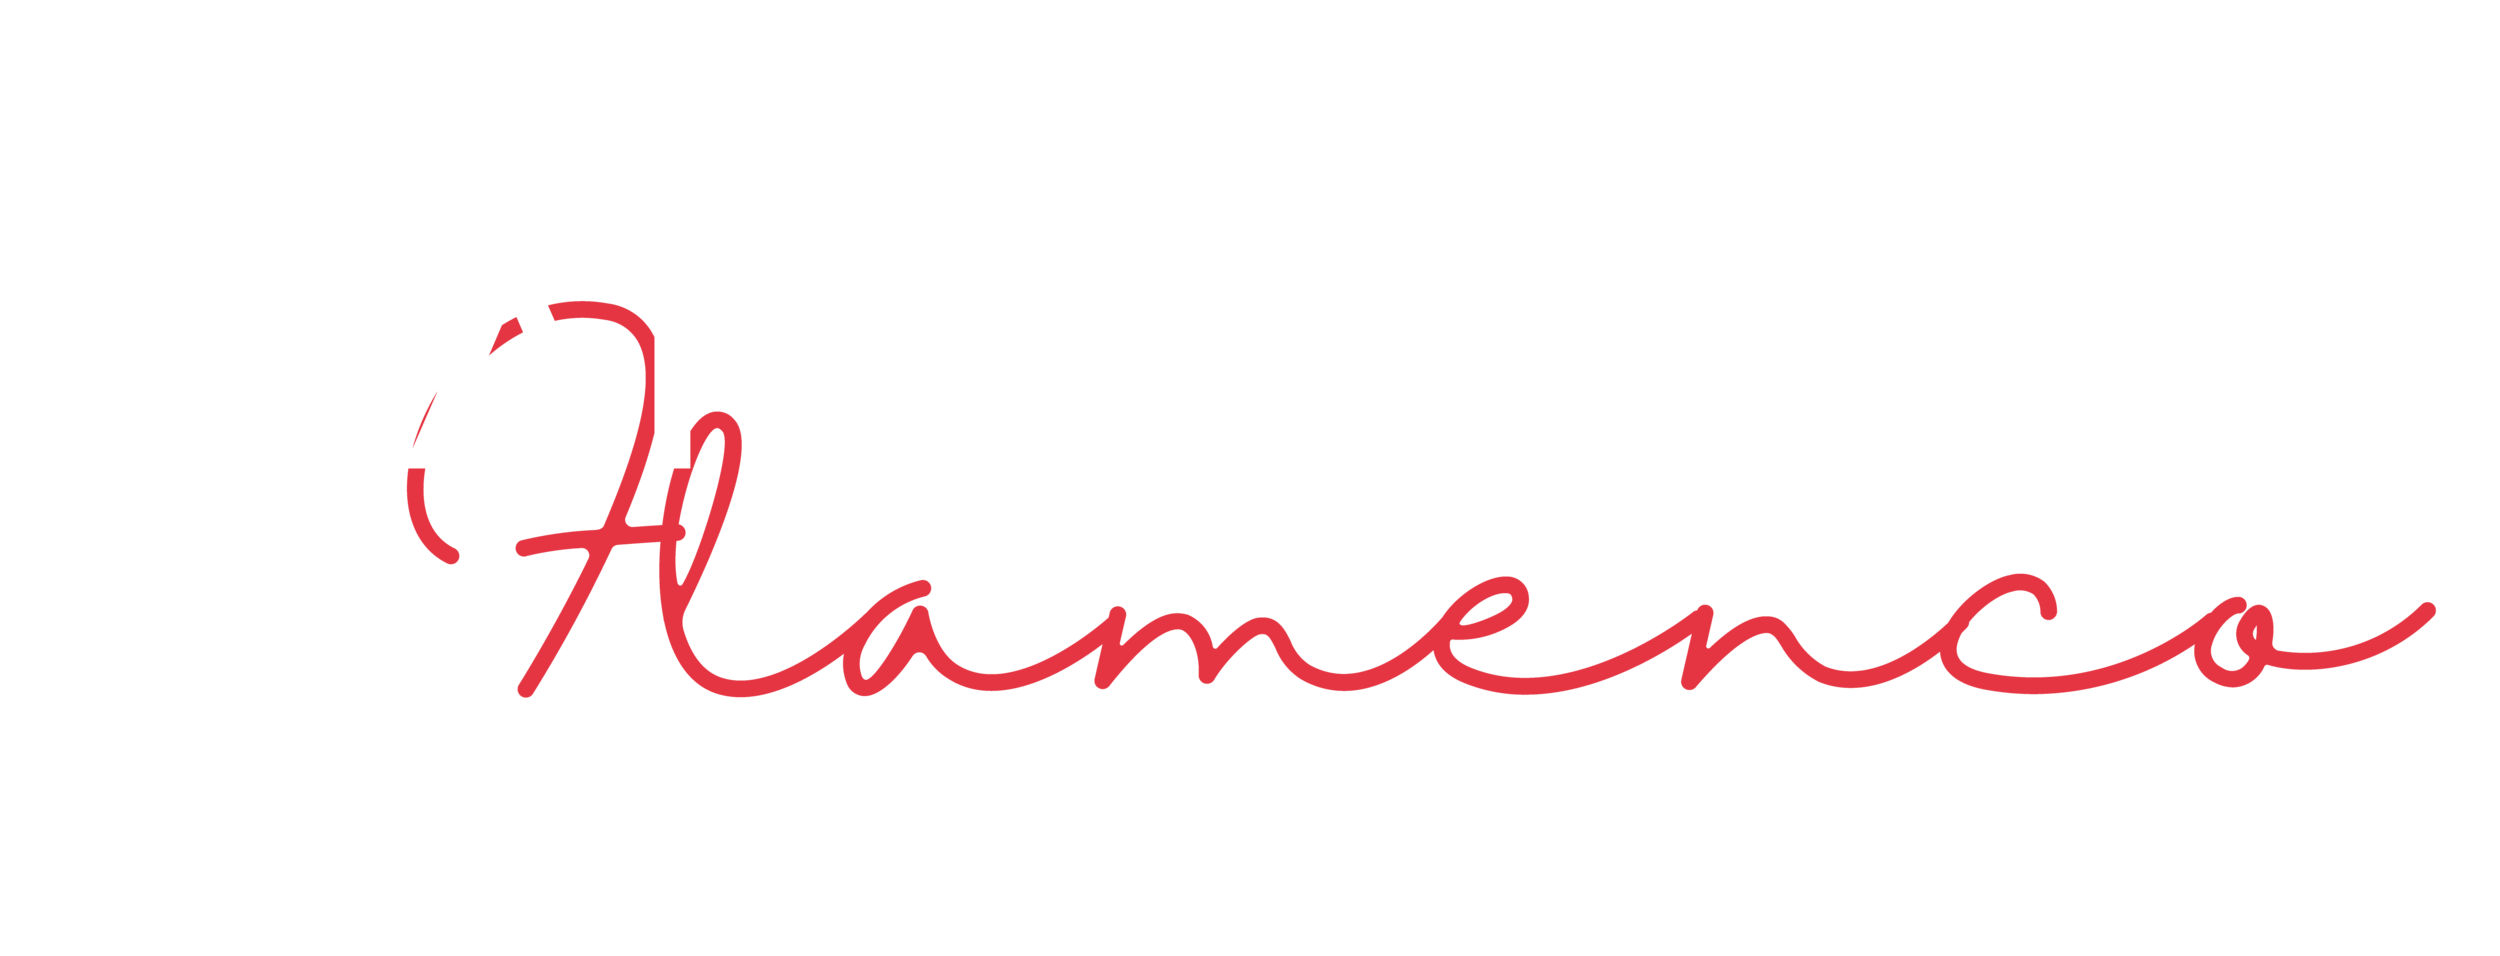 Diana Reyes Flamenco